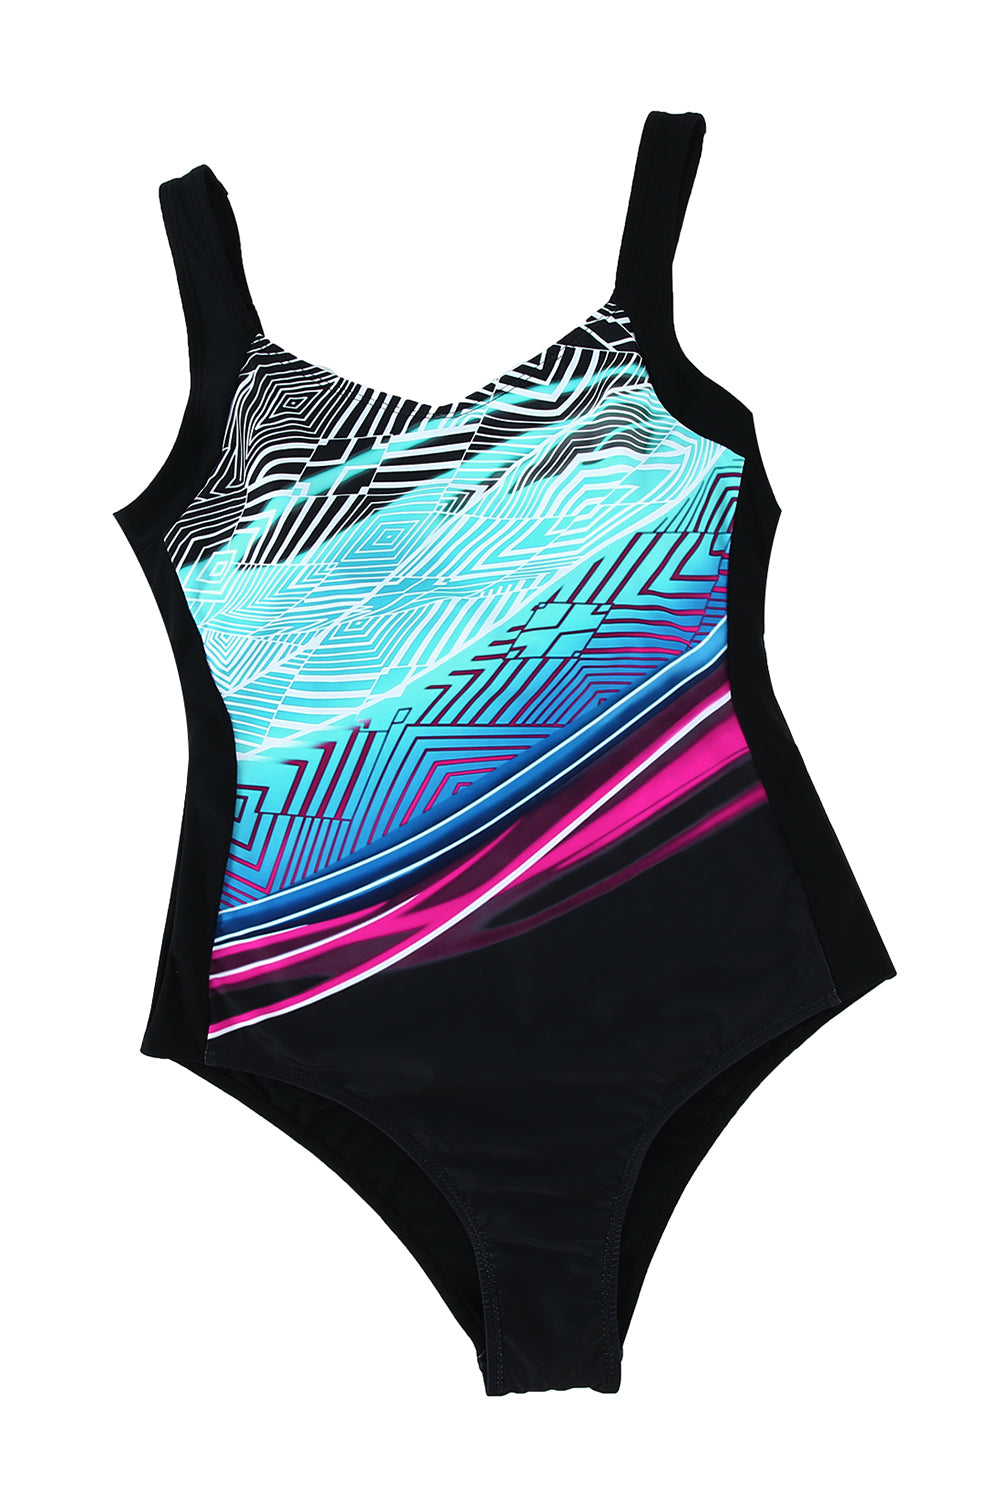 LC442787-4-S, LC442787-4-M, LC442787-4-L, LC442787-4-XL, LC442787-4-2XL, Sky Blue Women's One Piece Swimsuit Striped Pattern Print Sleeveless Bathing Suit